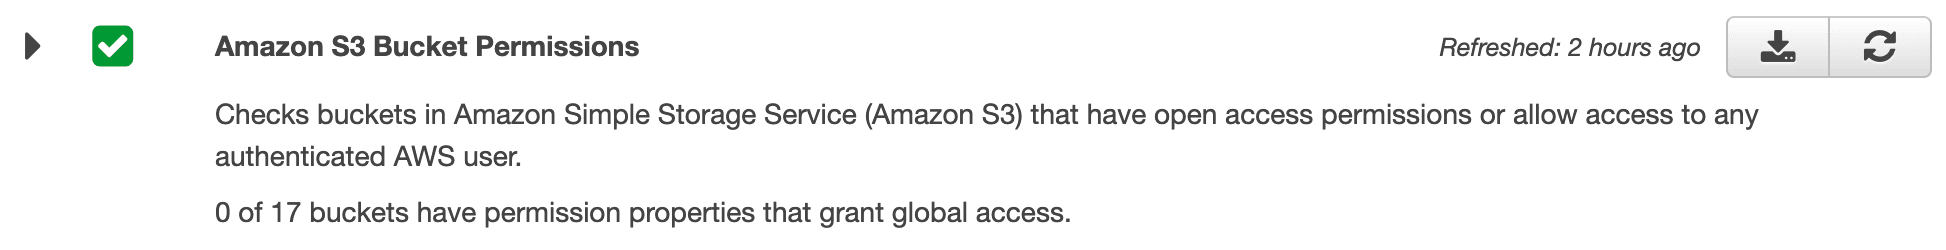 Trusted Advisor: Amazon S3 Bucket Permissions check